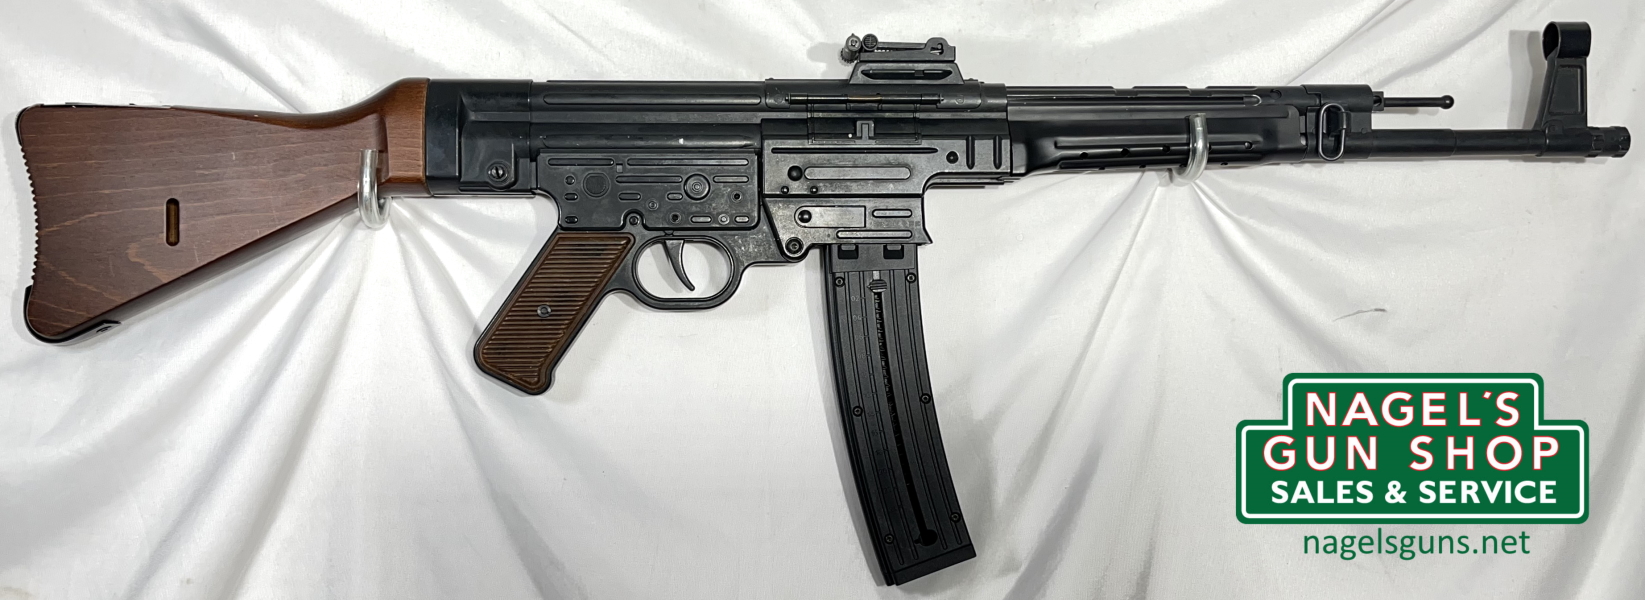 American Tactical GSG STG-44 22LR Rifle